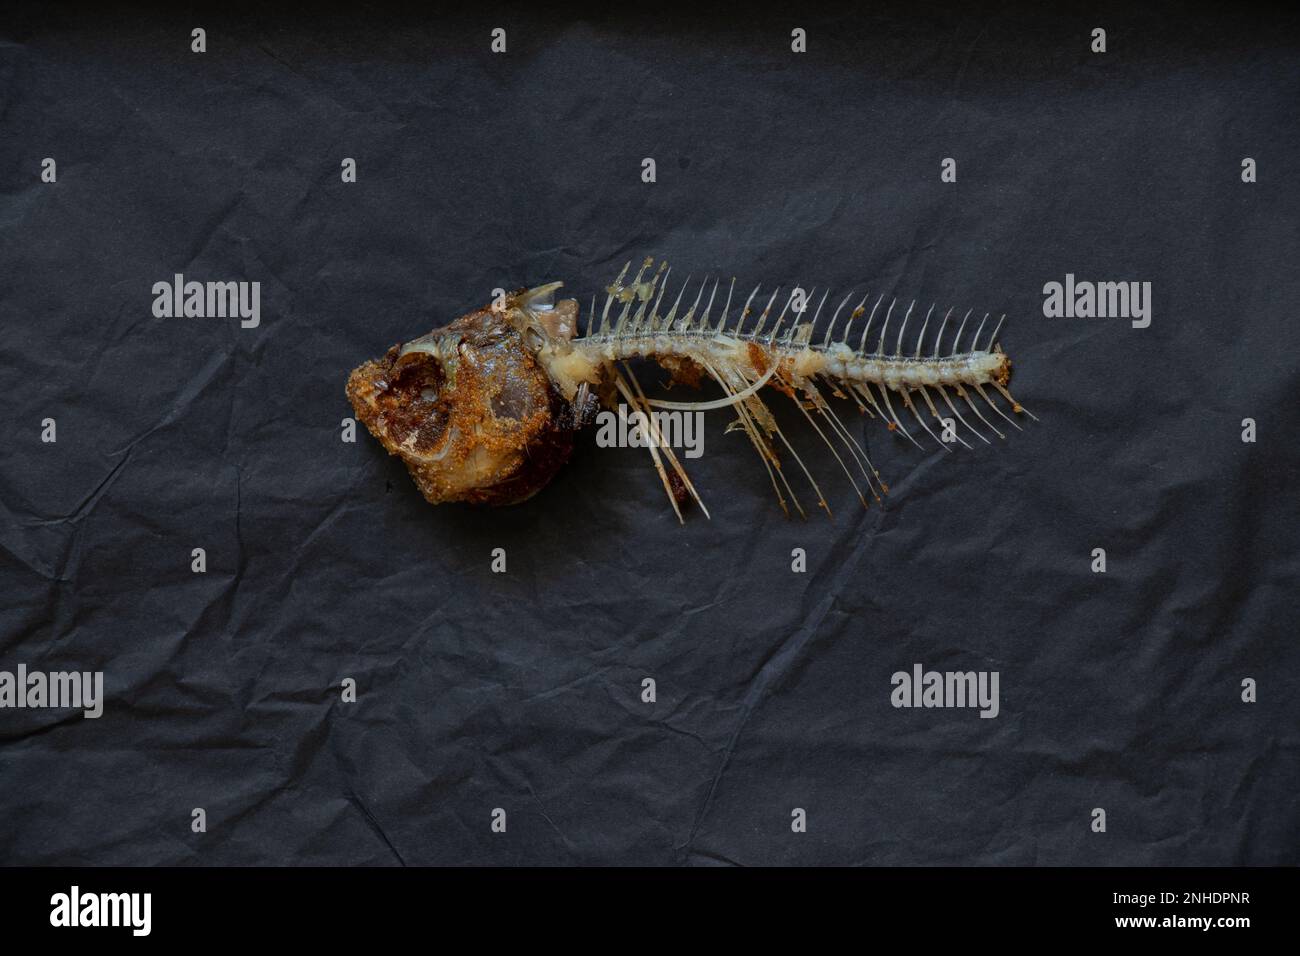 fried fish skeleton on black paper background close up Stock Photo